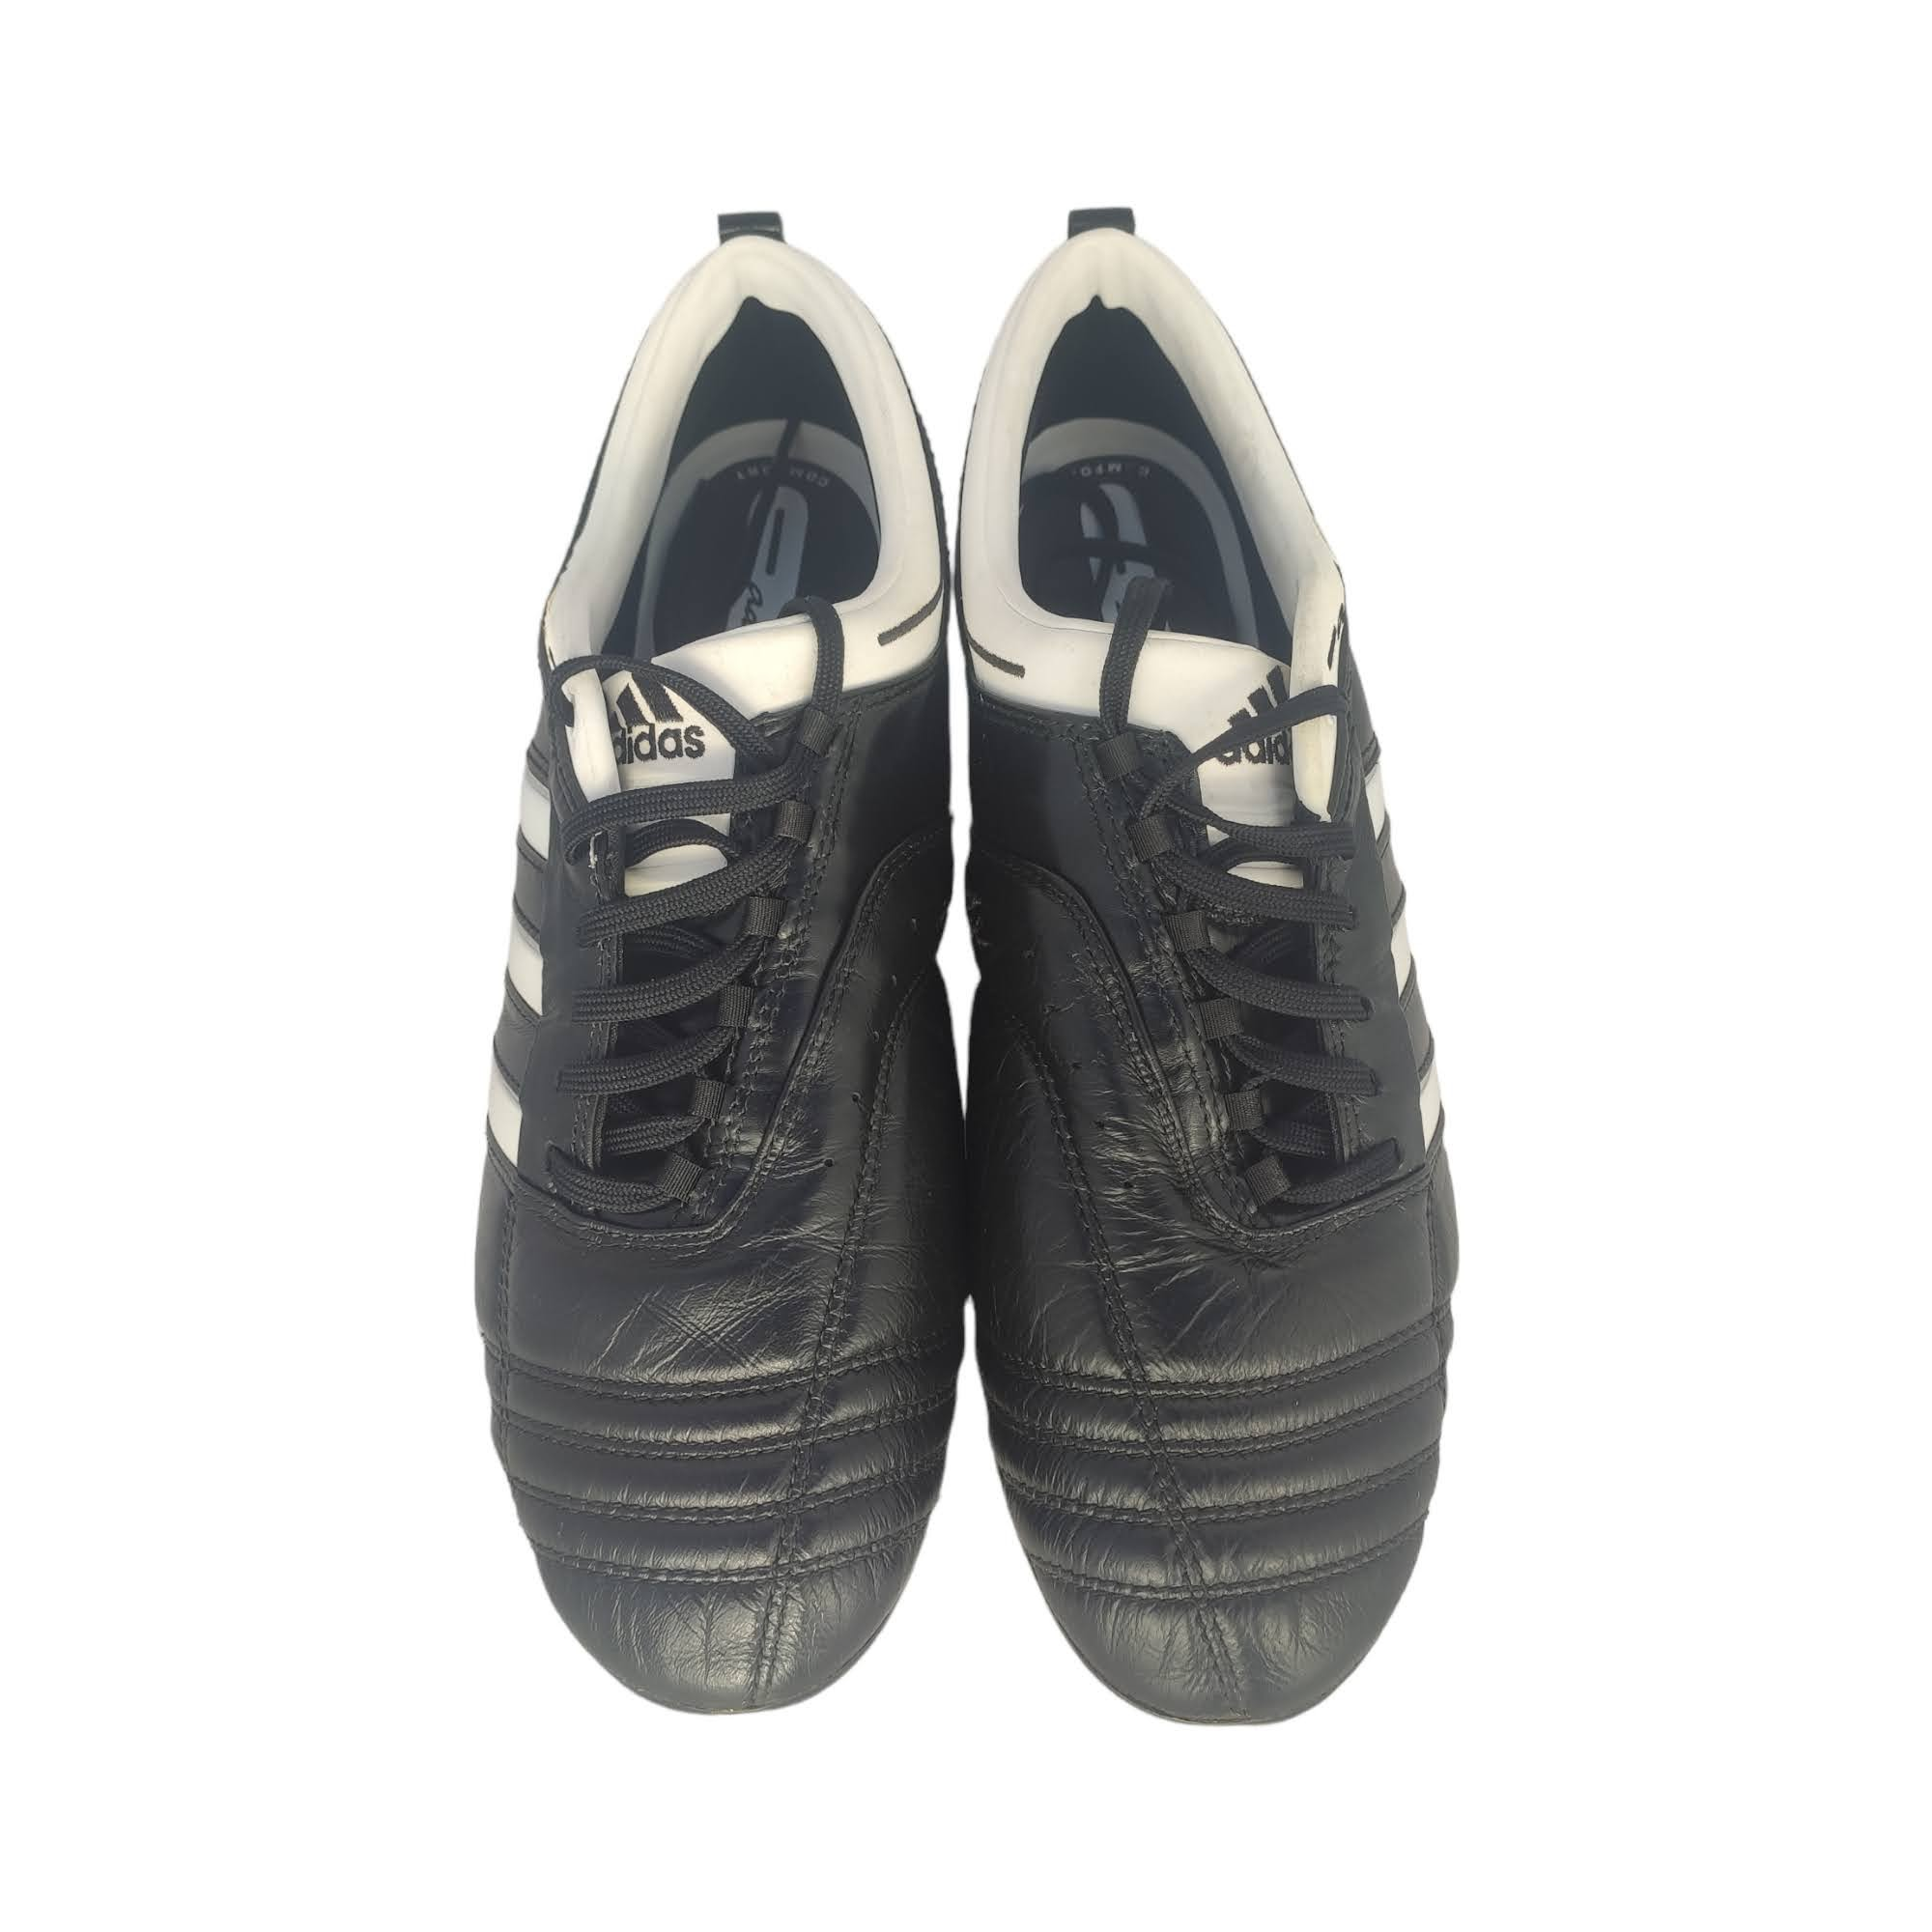 Adidas AdiPure II – Platinum Boots